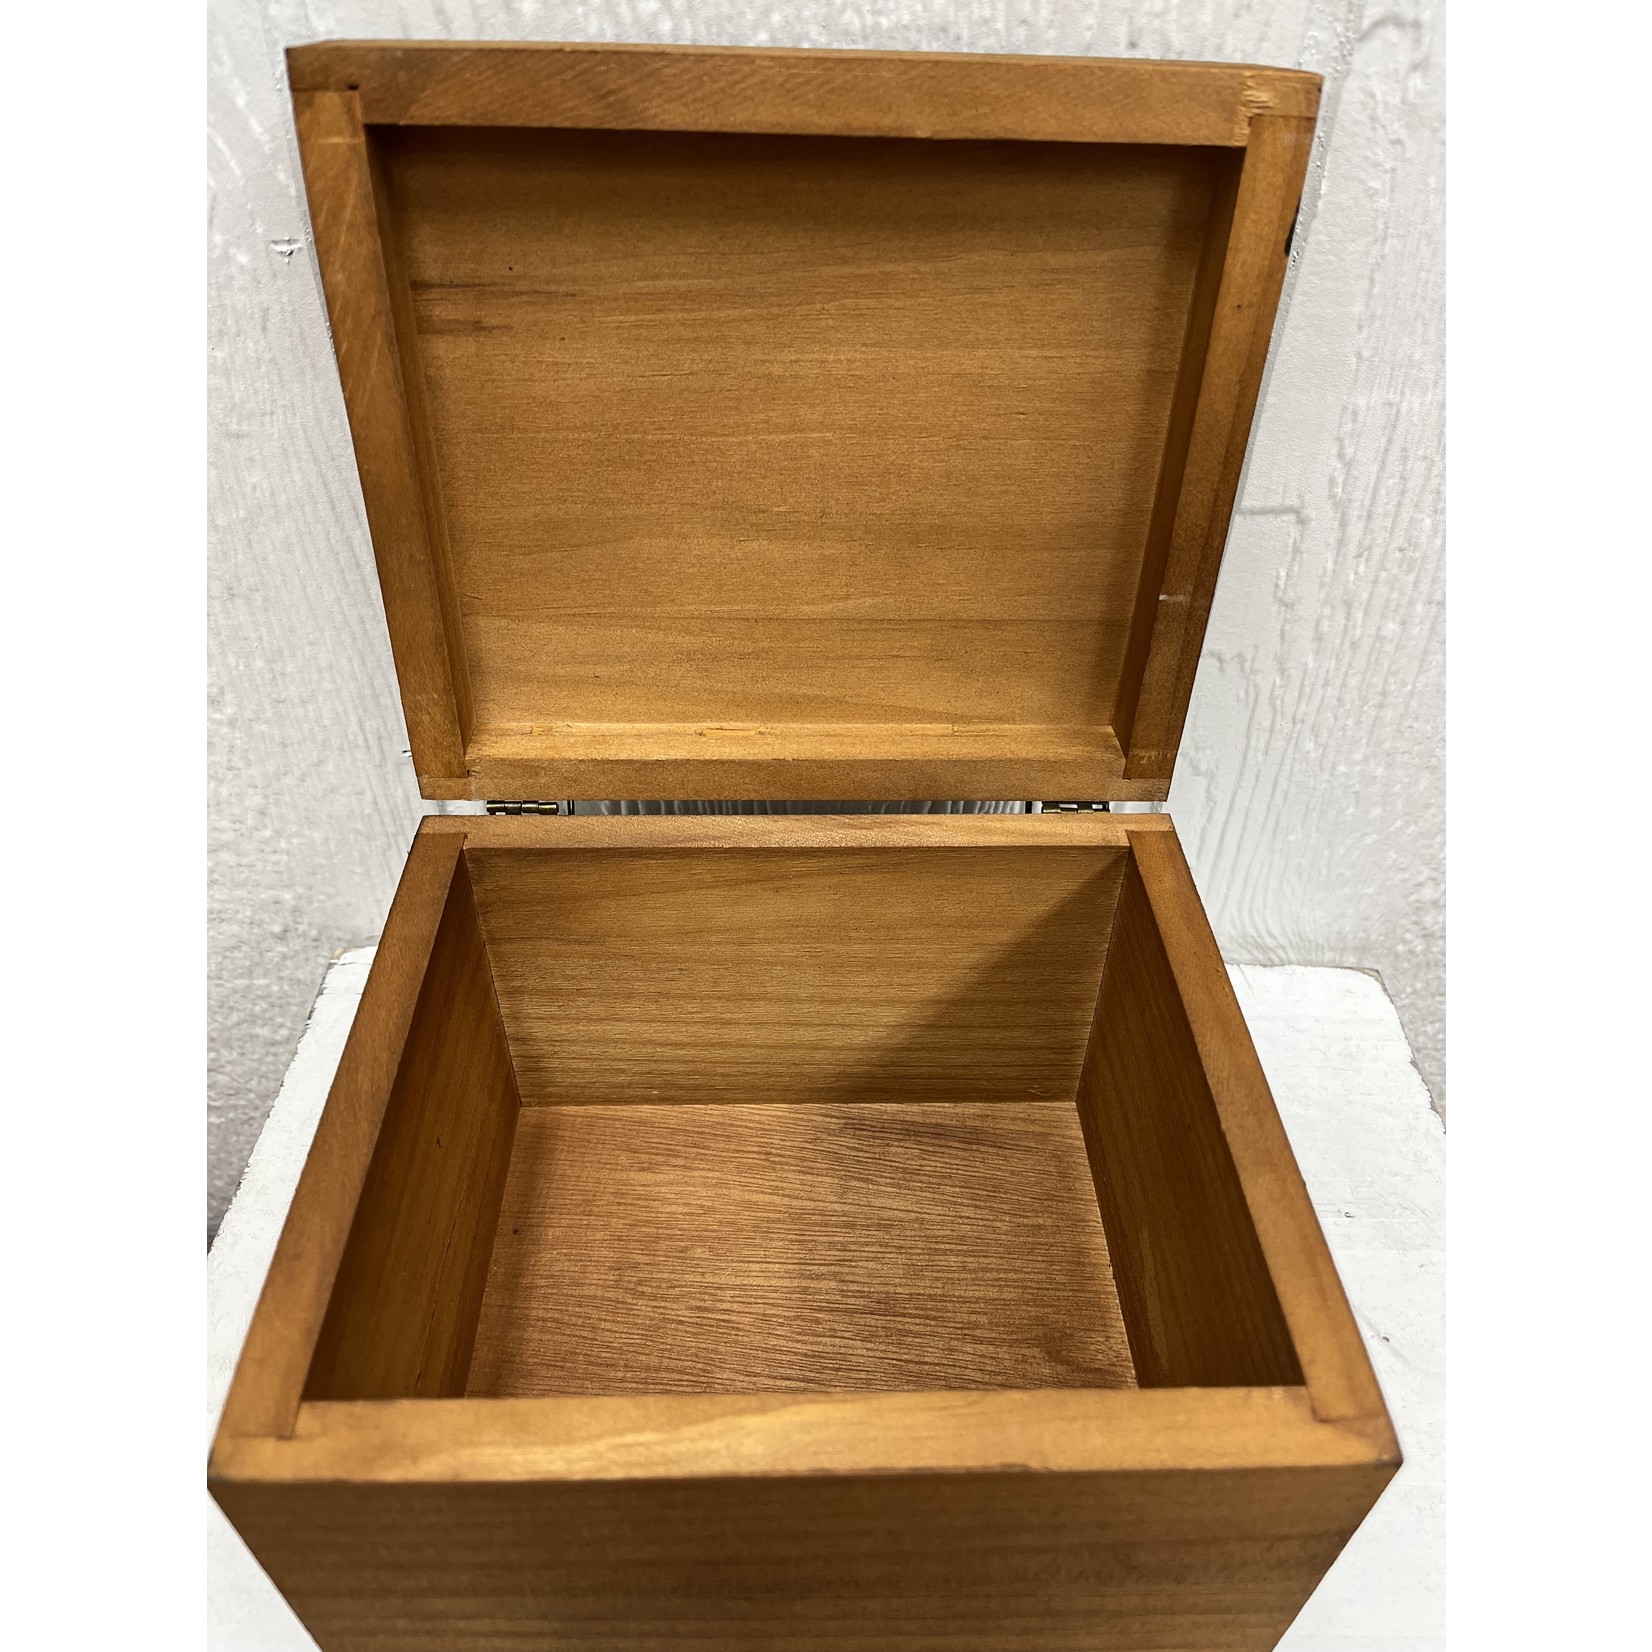 Wooden Recipe Box Natural  # 6124